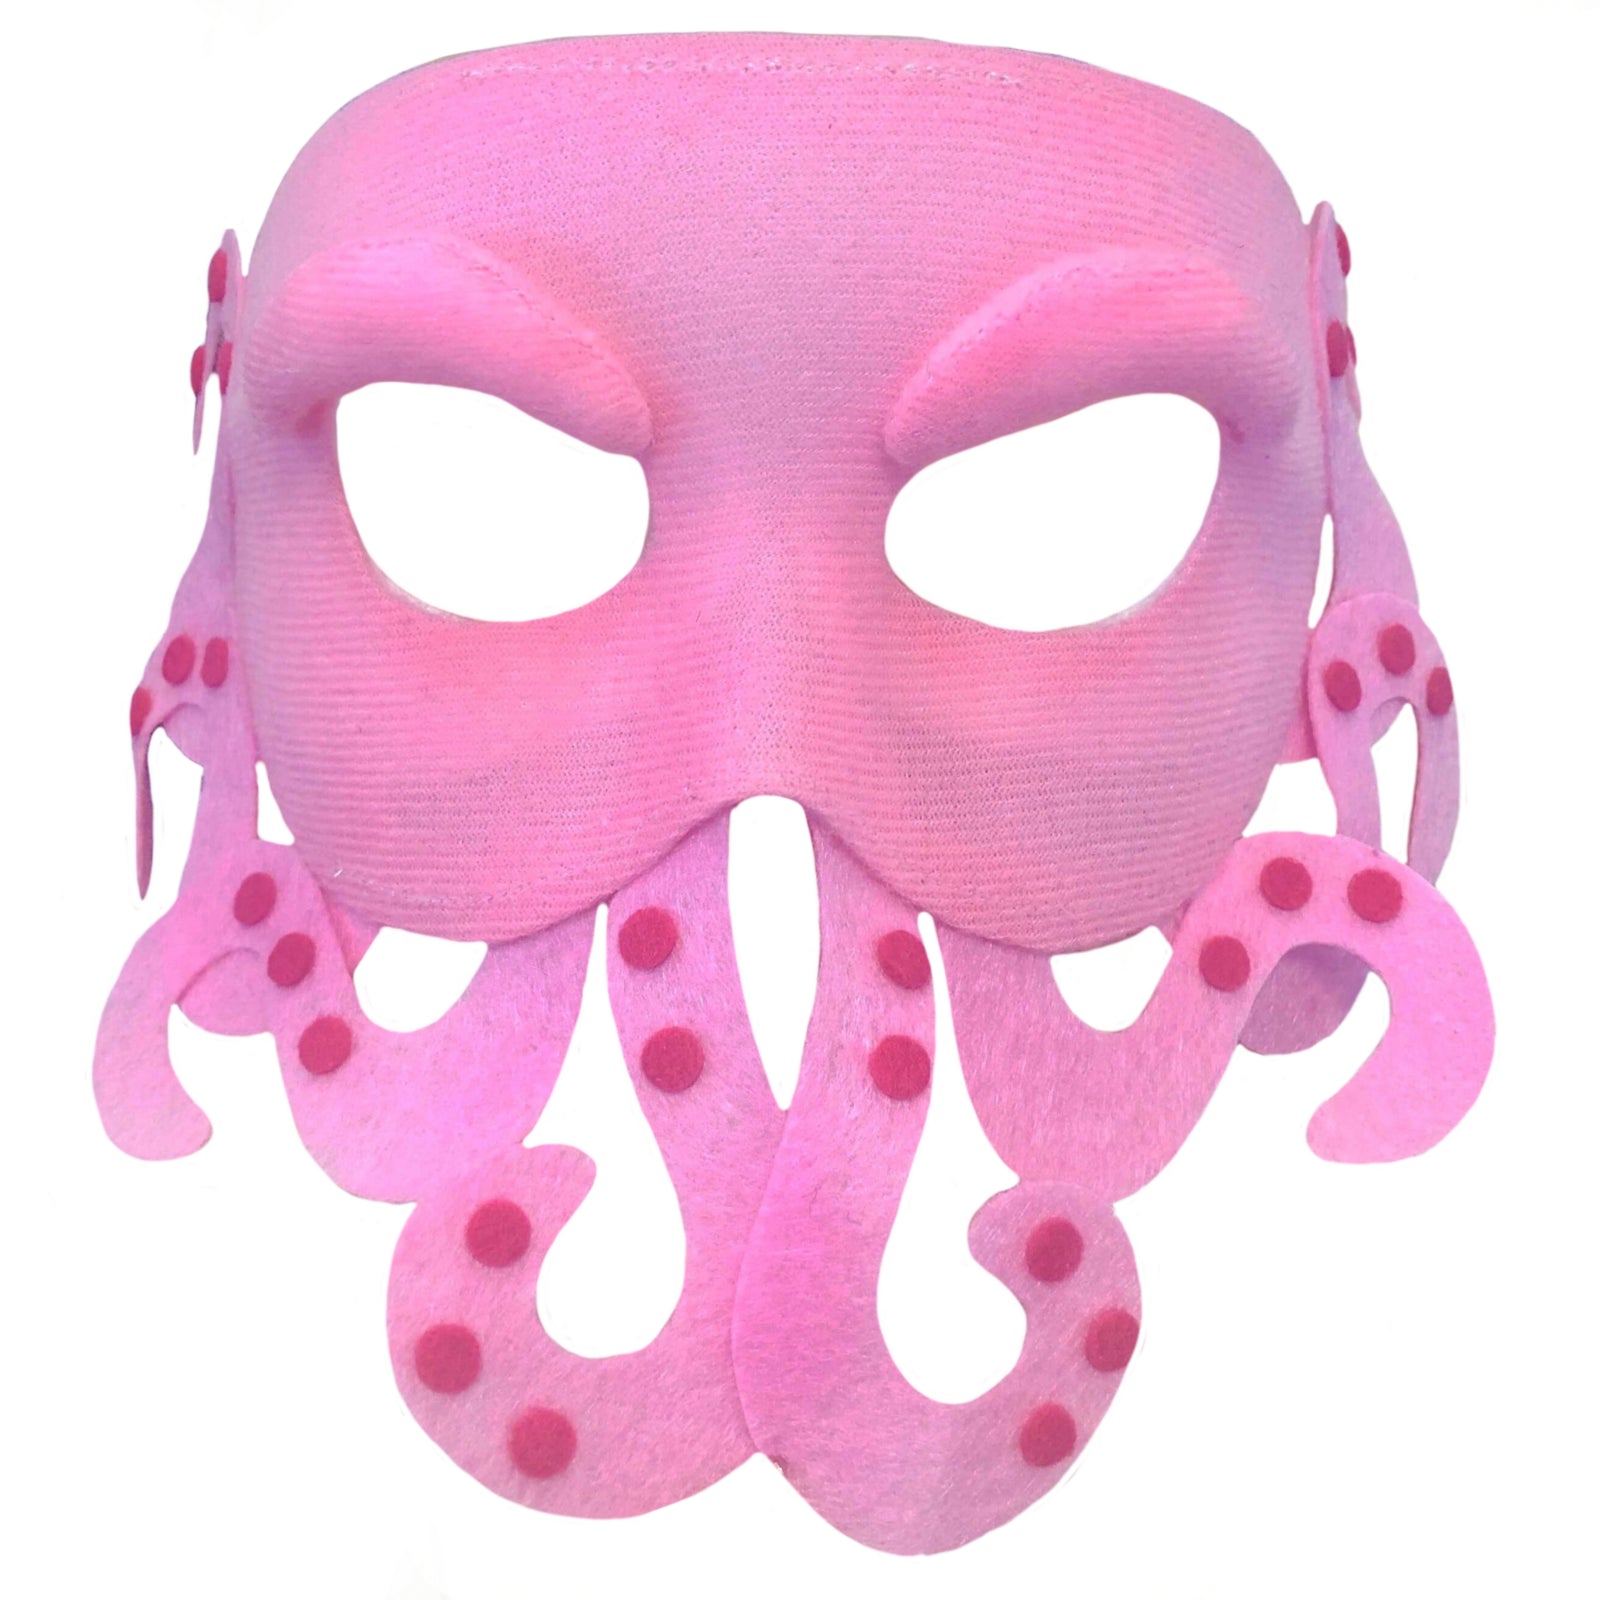 Deluxe Octopus Animal Mask